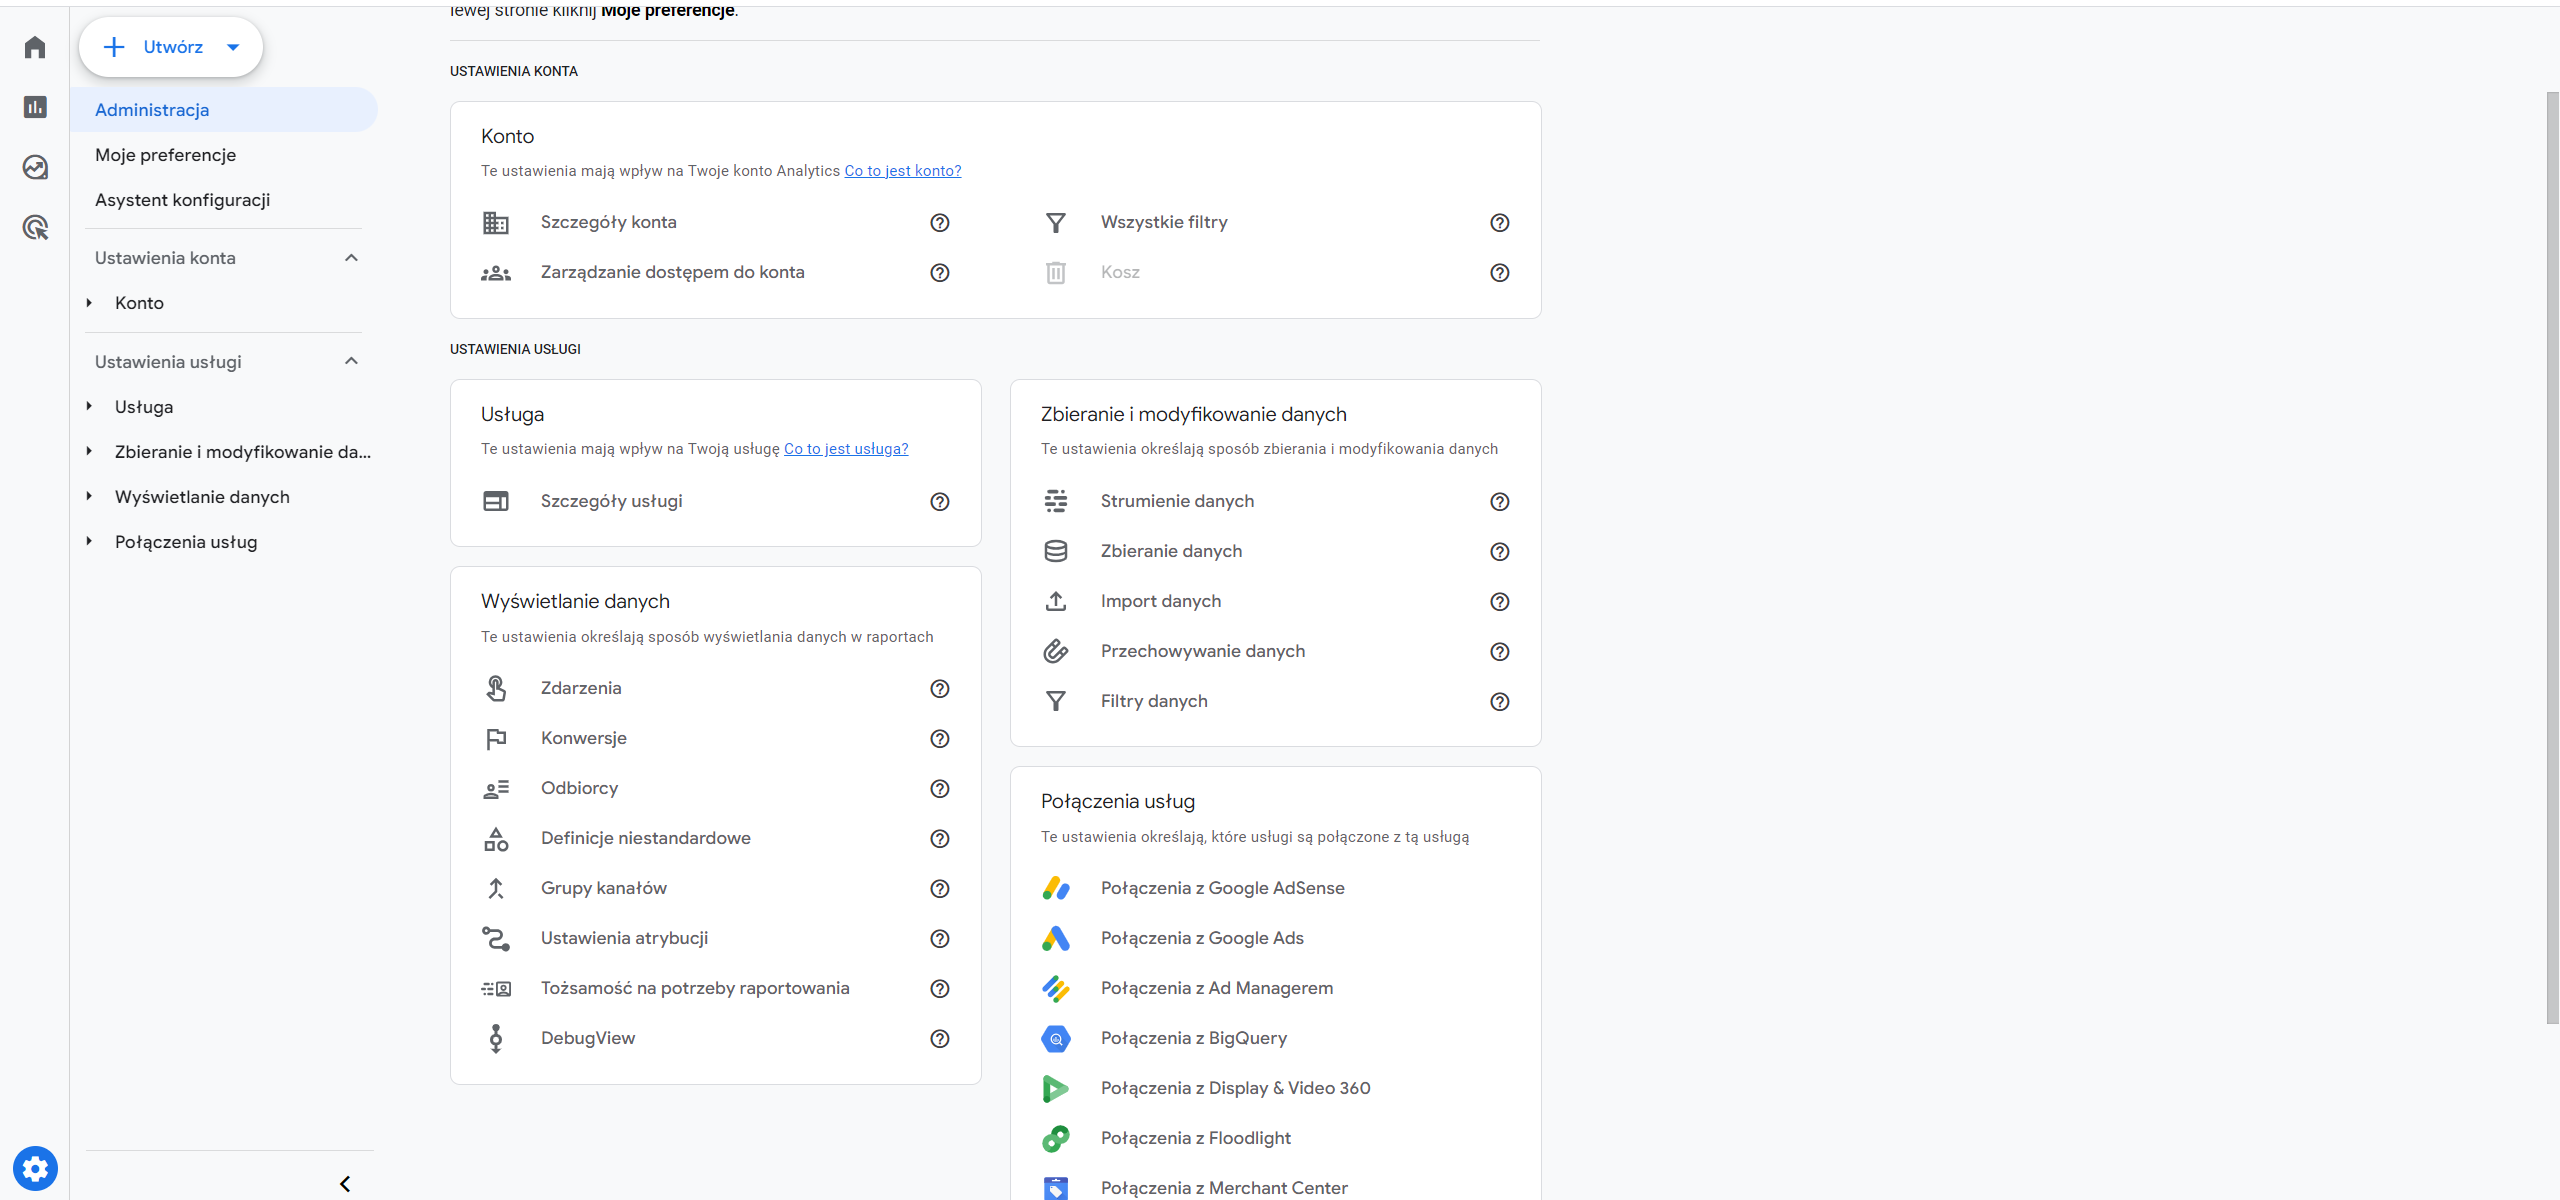 interfejs Google Analytics 4 - administracja